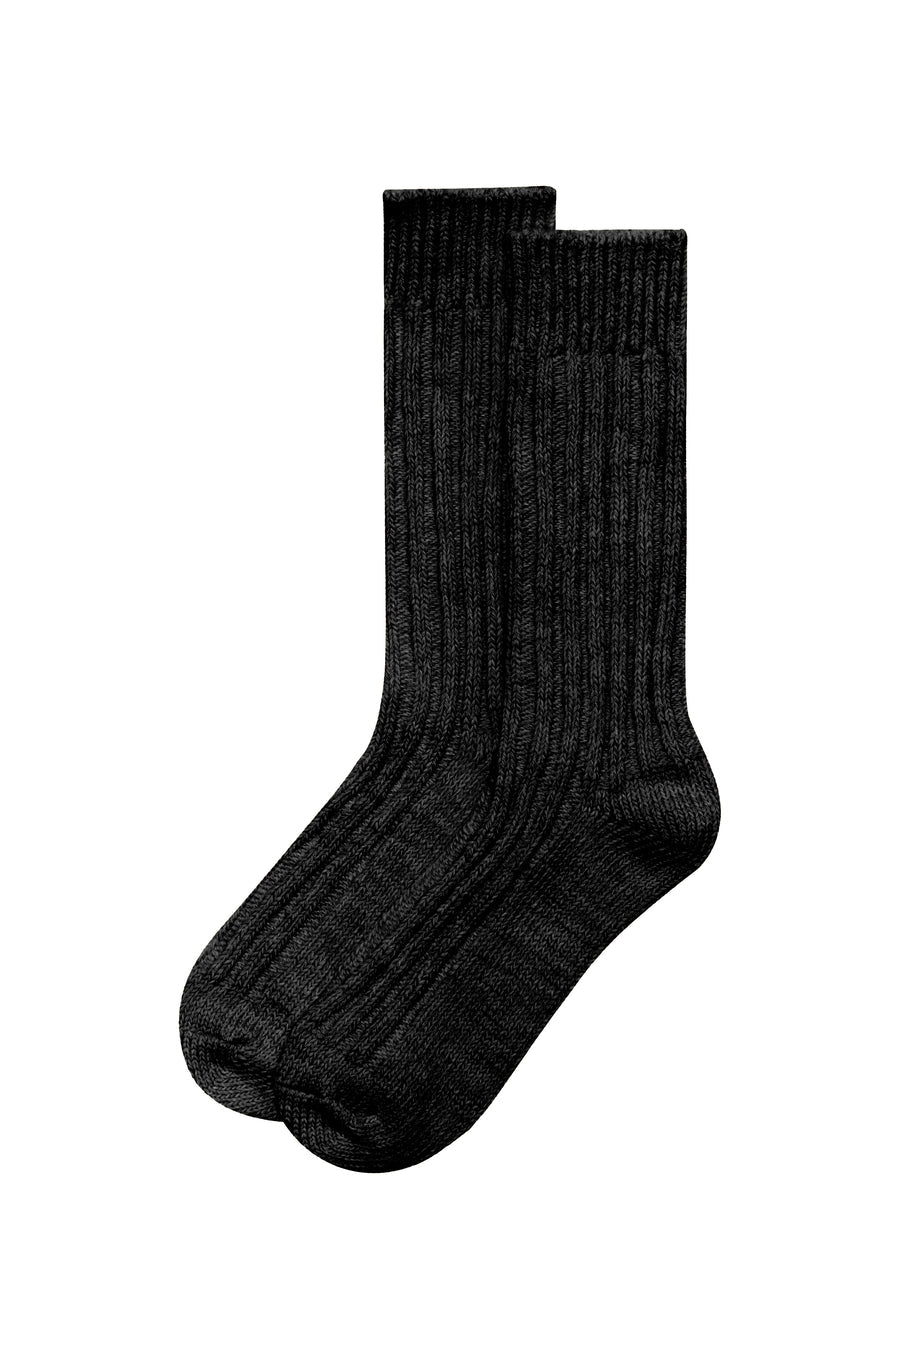 The Woven Sock- Black